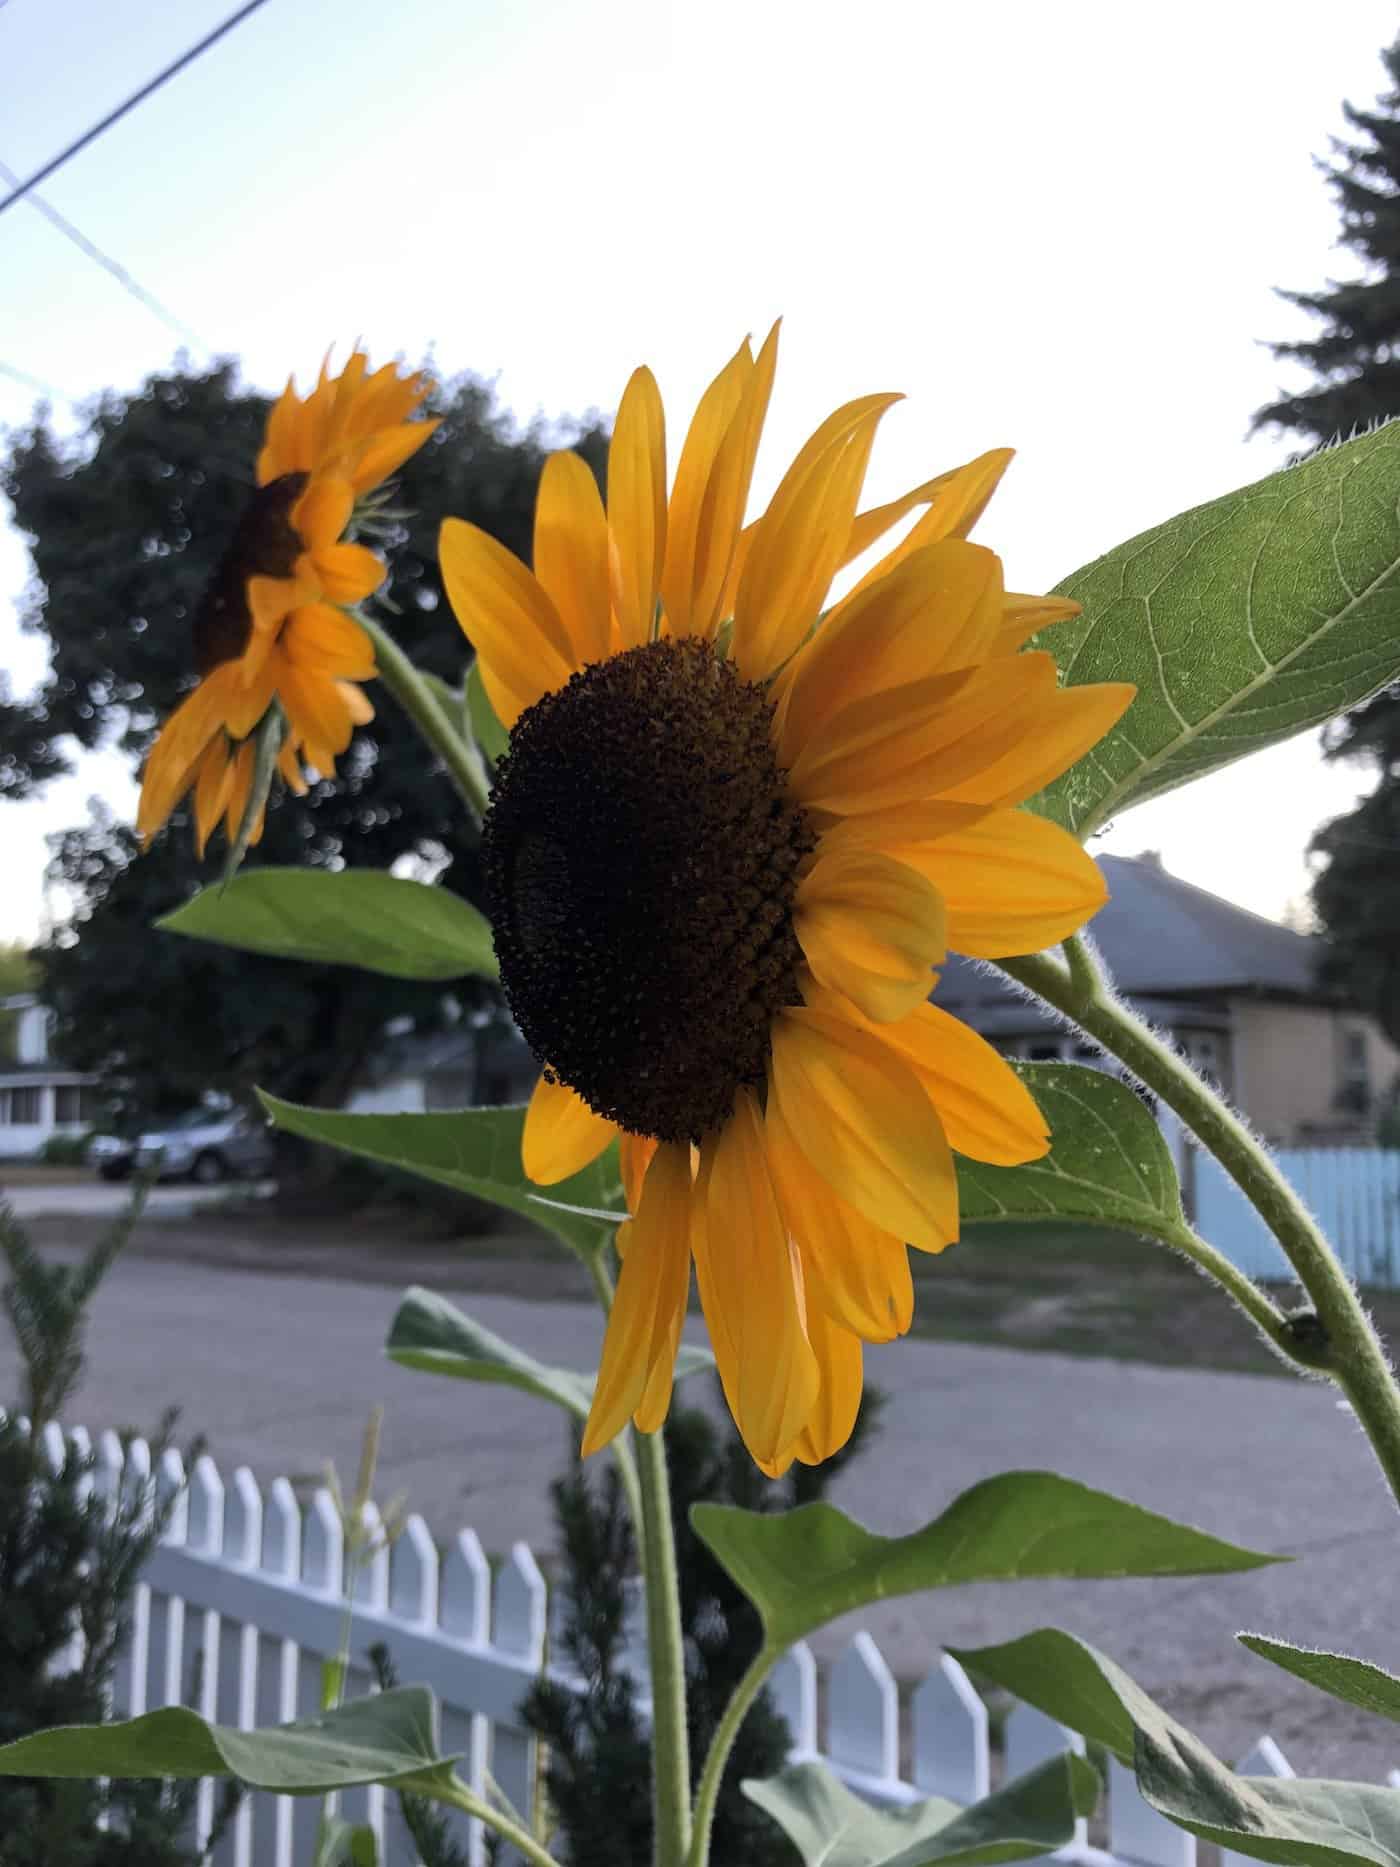 Growing sunflowers